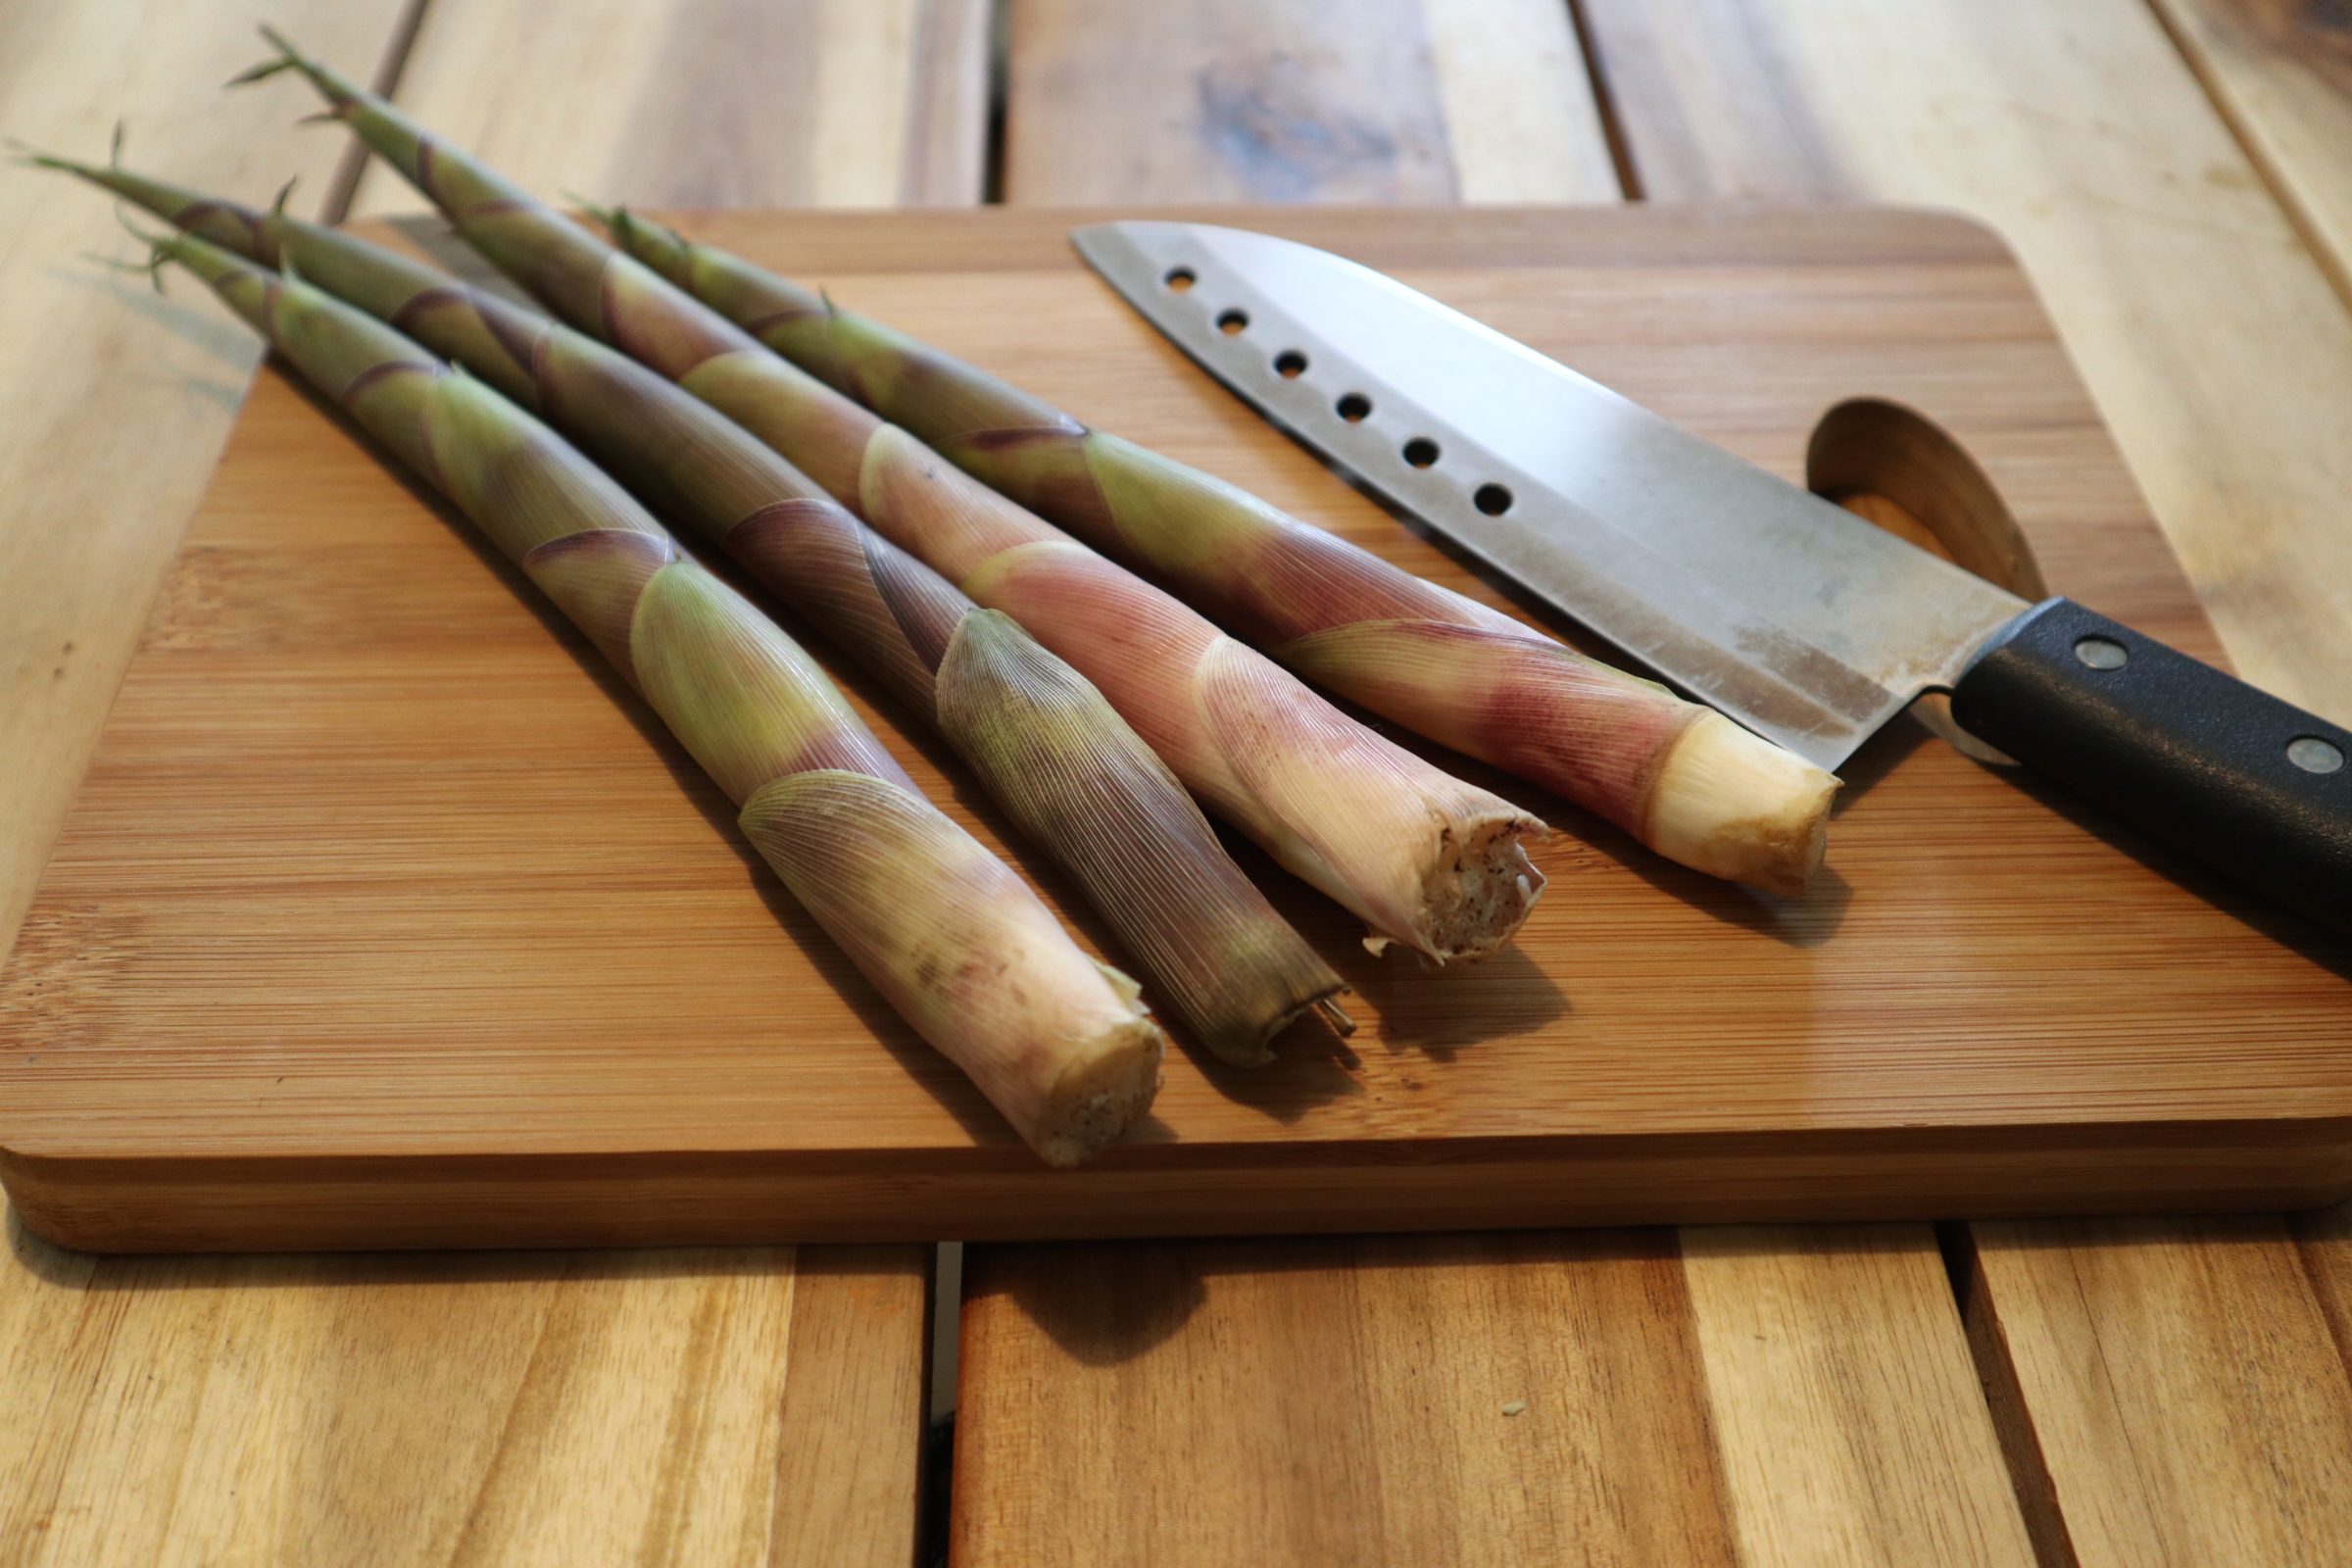 How to 山菜料理！〜根曲り竹の皮の剥き方をご紹介します〜